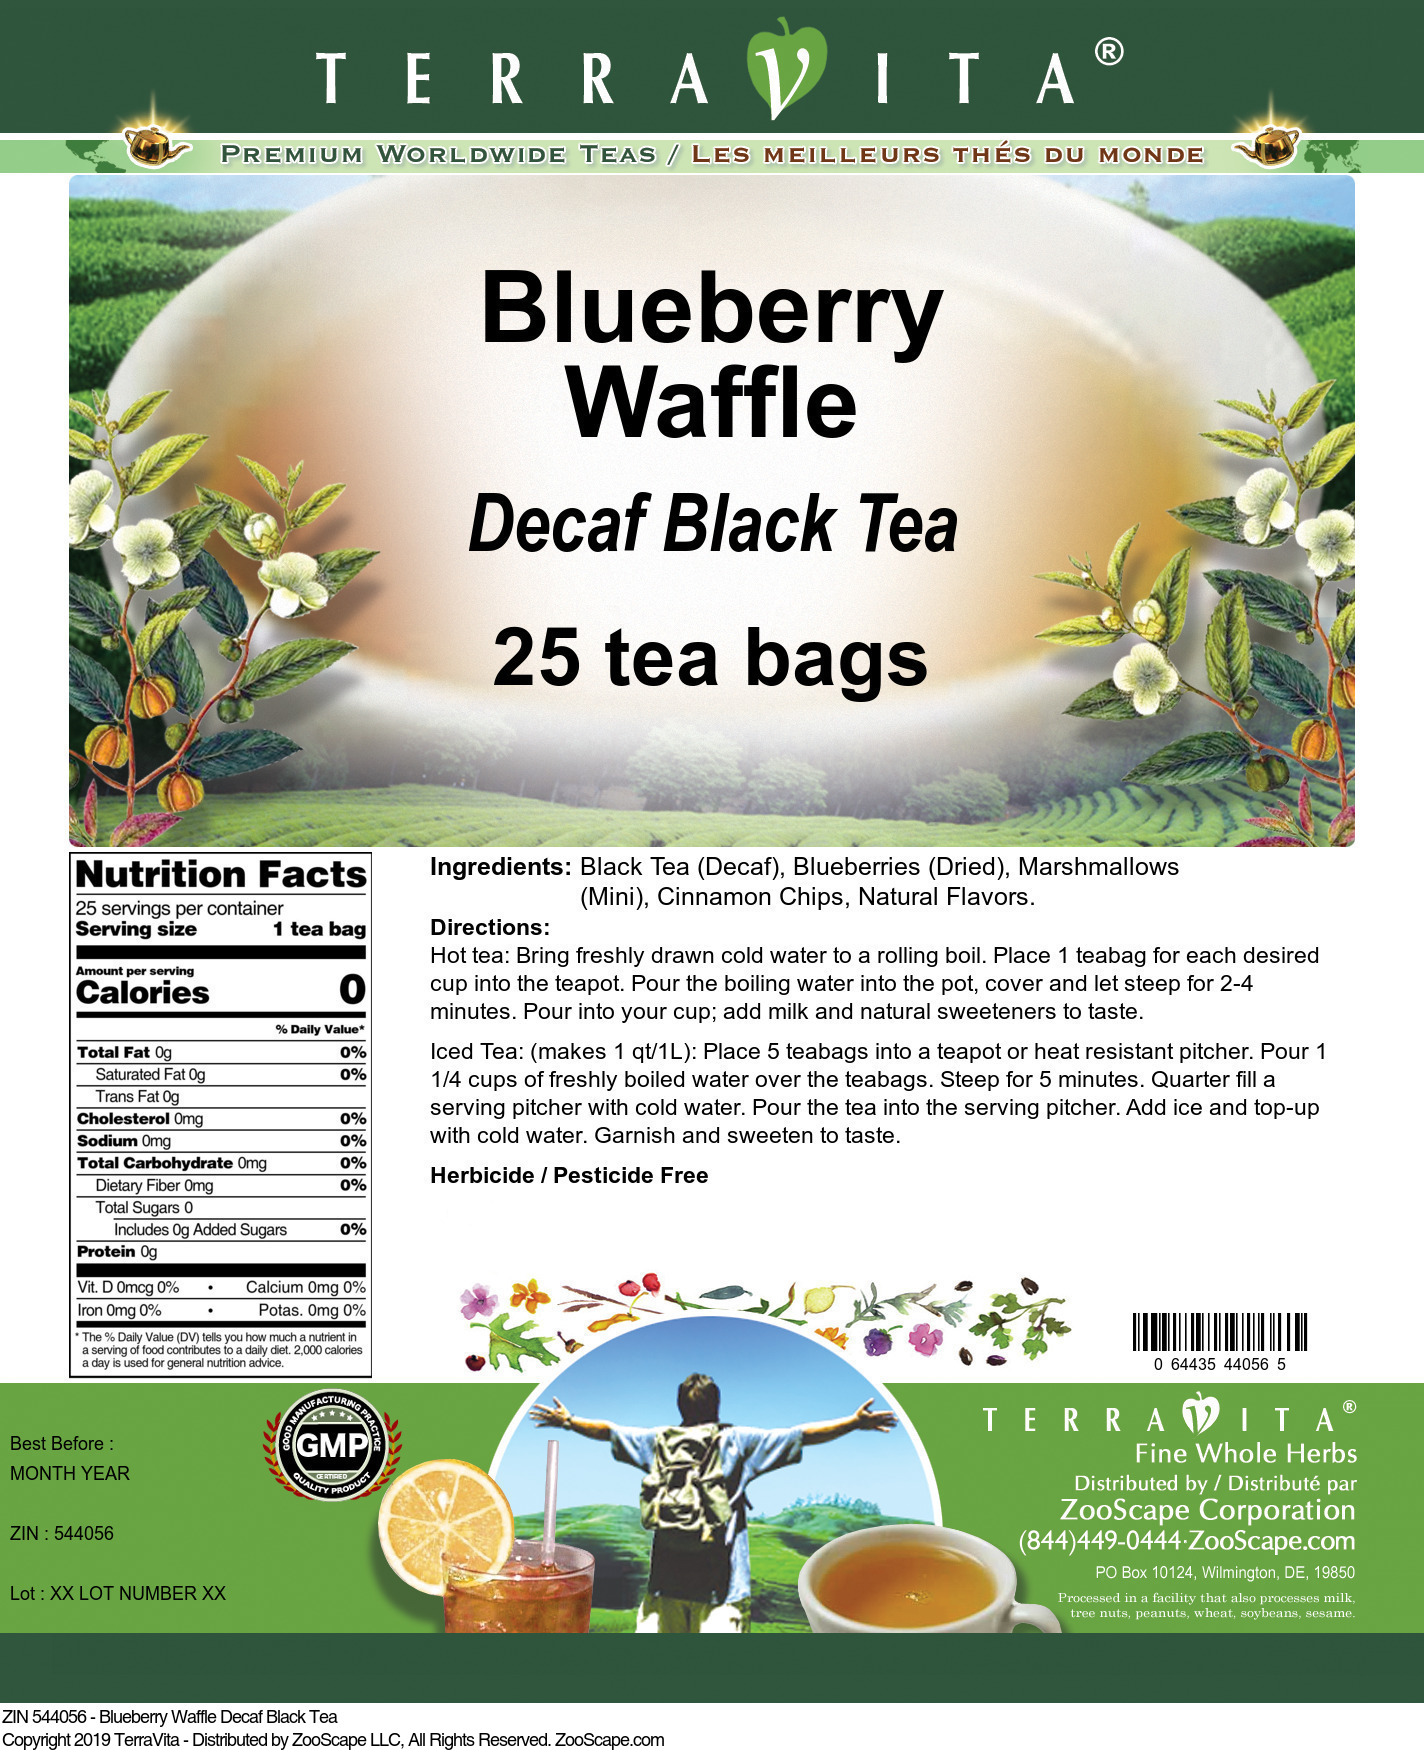 Blueberry Waffle Decaf Black Tea - Label